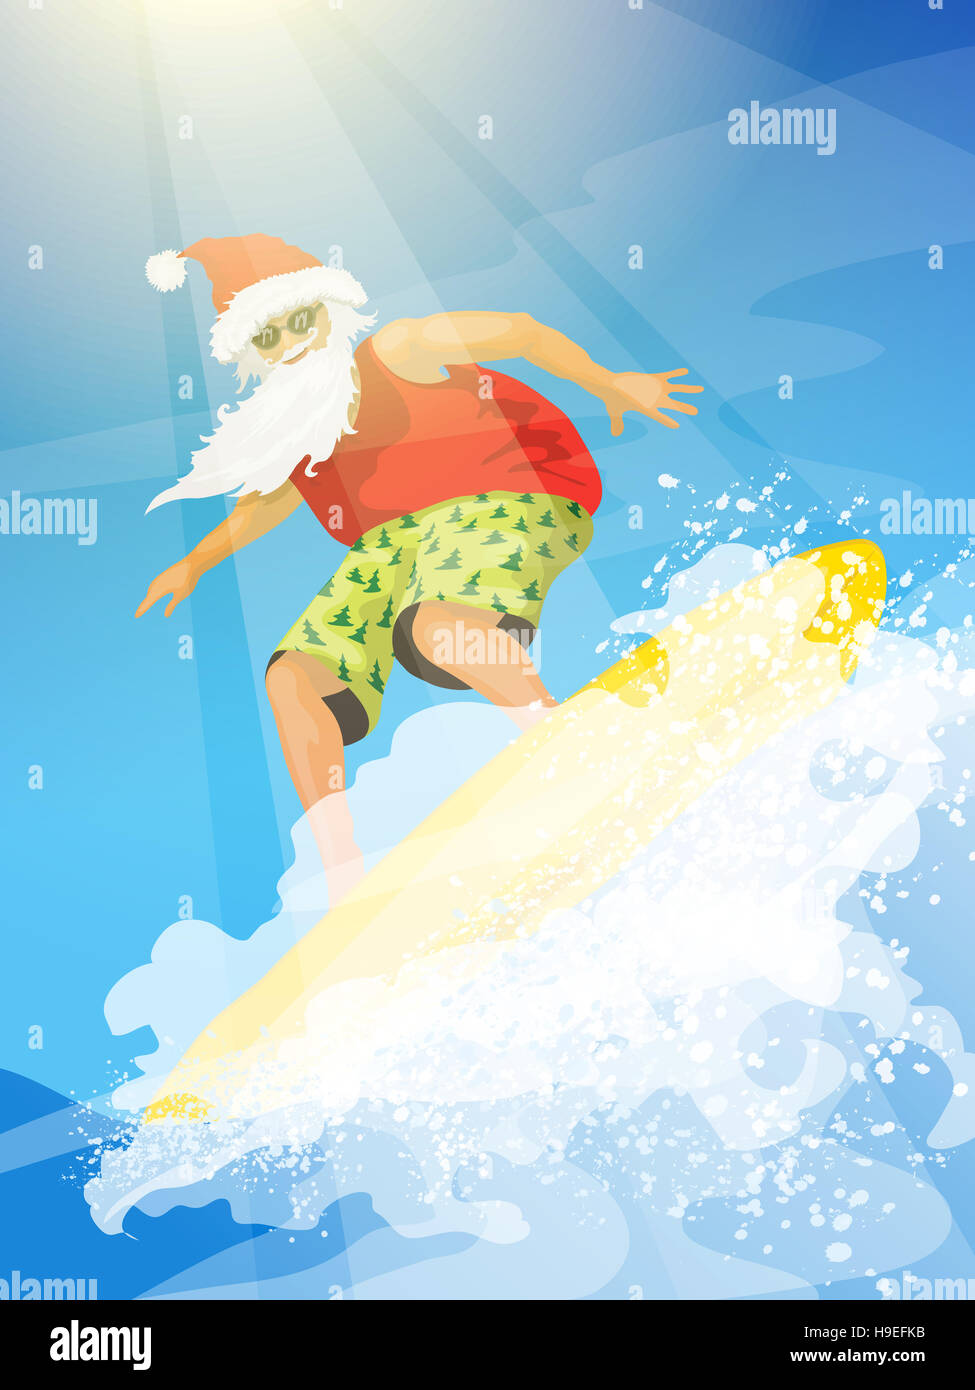 Humorous surfing greeting card SURF CHRISTMAS CARD Santa ducking under wave 